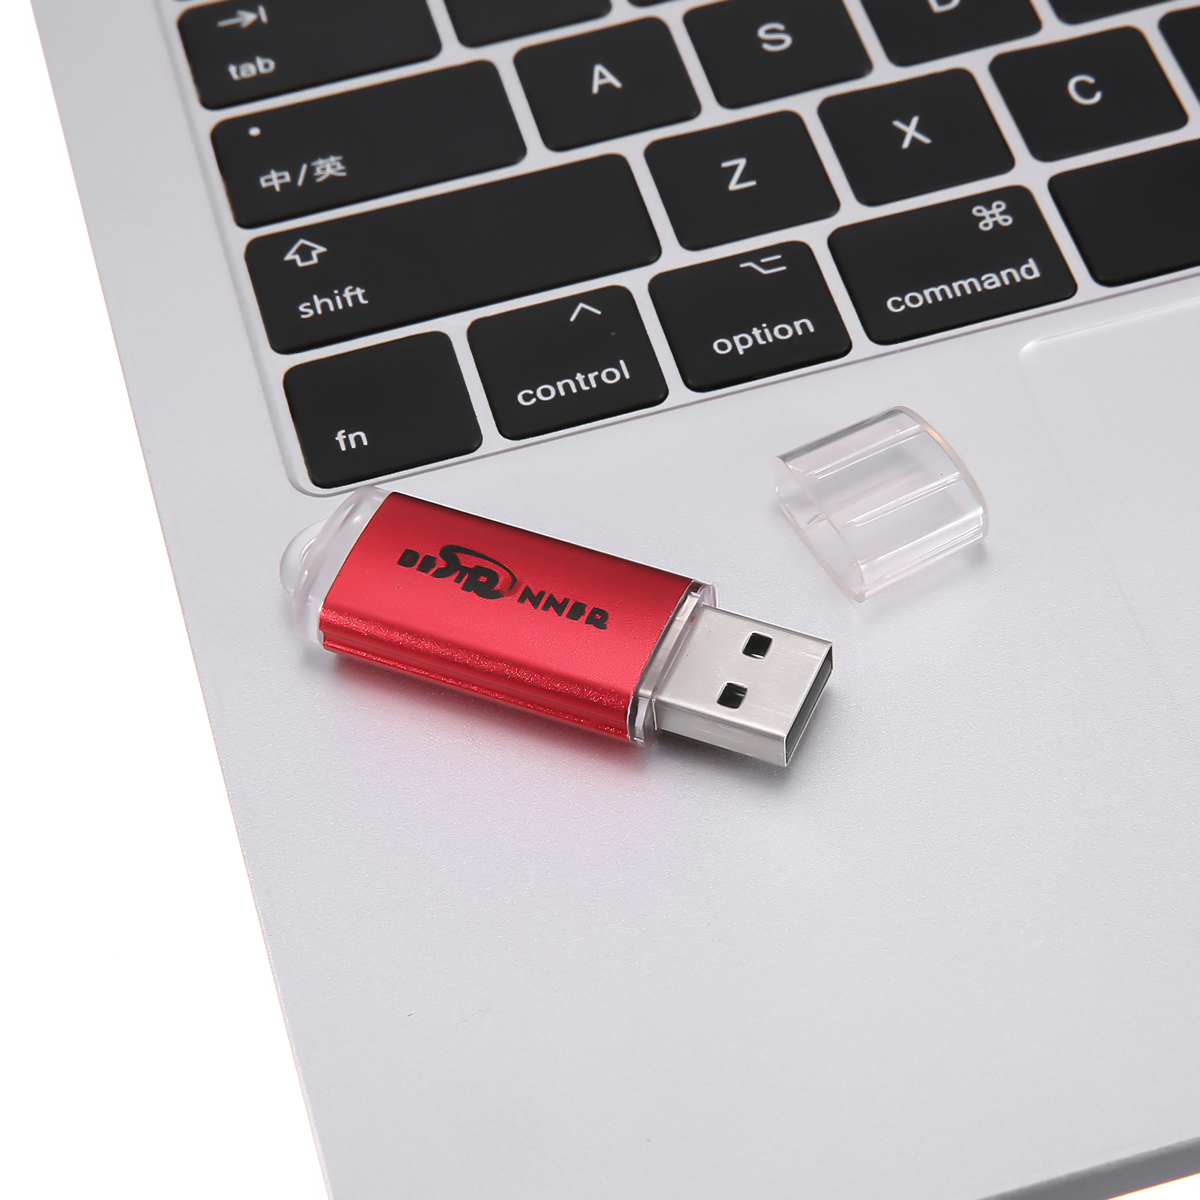 Bestrunner-10Pcs-128MB-USB-20-Flash-Drive-Candy-Red-Color-Memory-Pen-Storage-Thumb-U-Disk-1939063-8